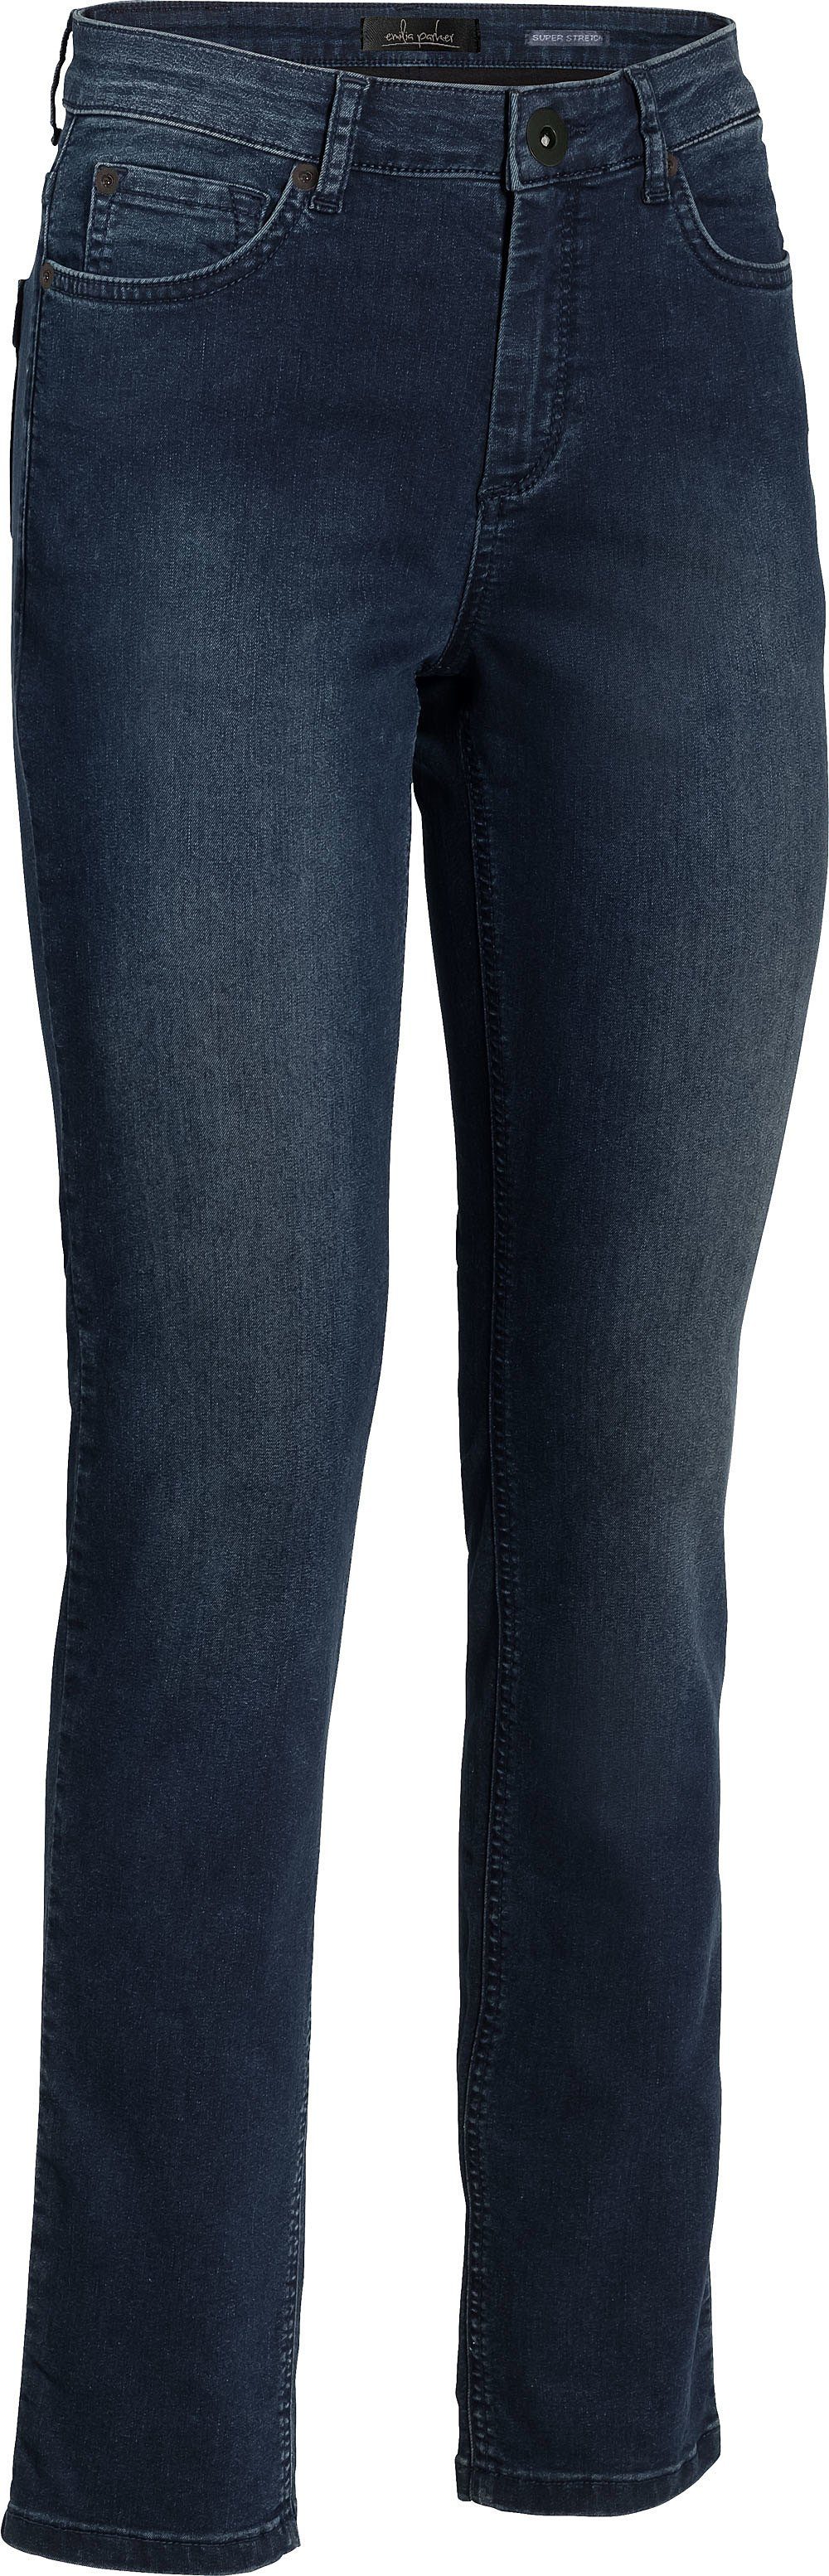 Emilia Parker Stretch-Hose ultrabequeme Sitz mit Jeans mittelblau knackigem